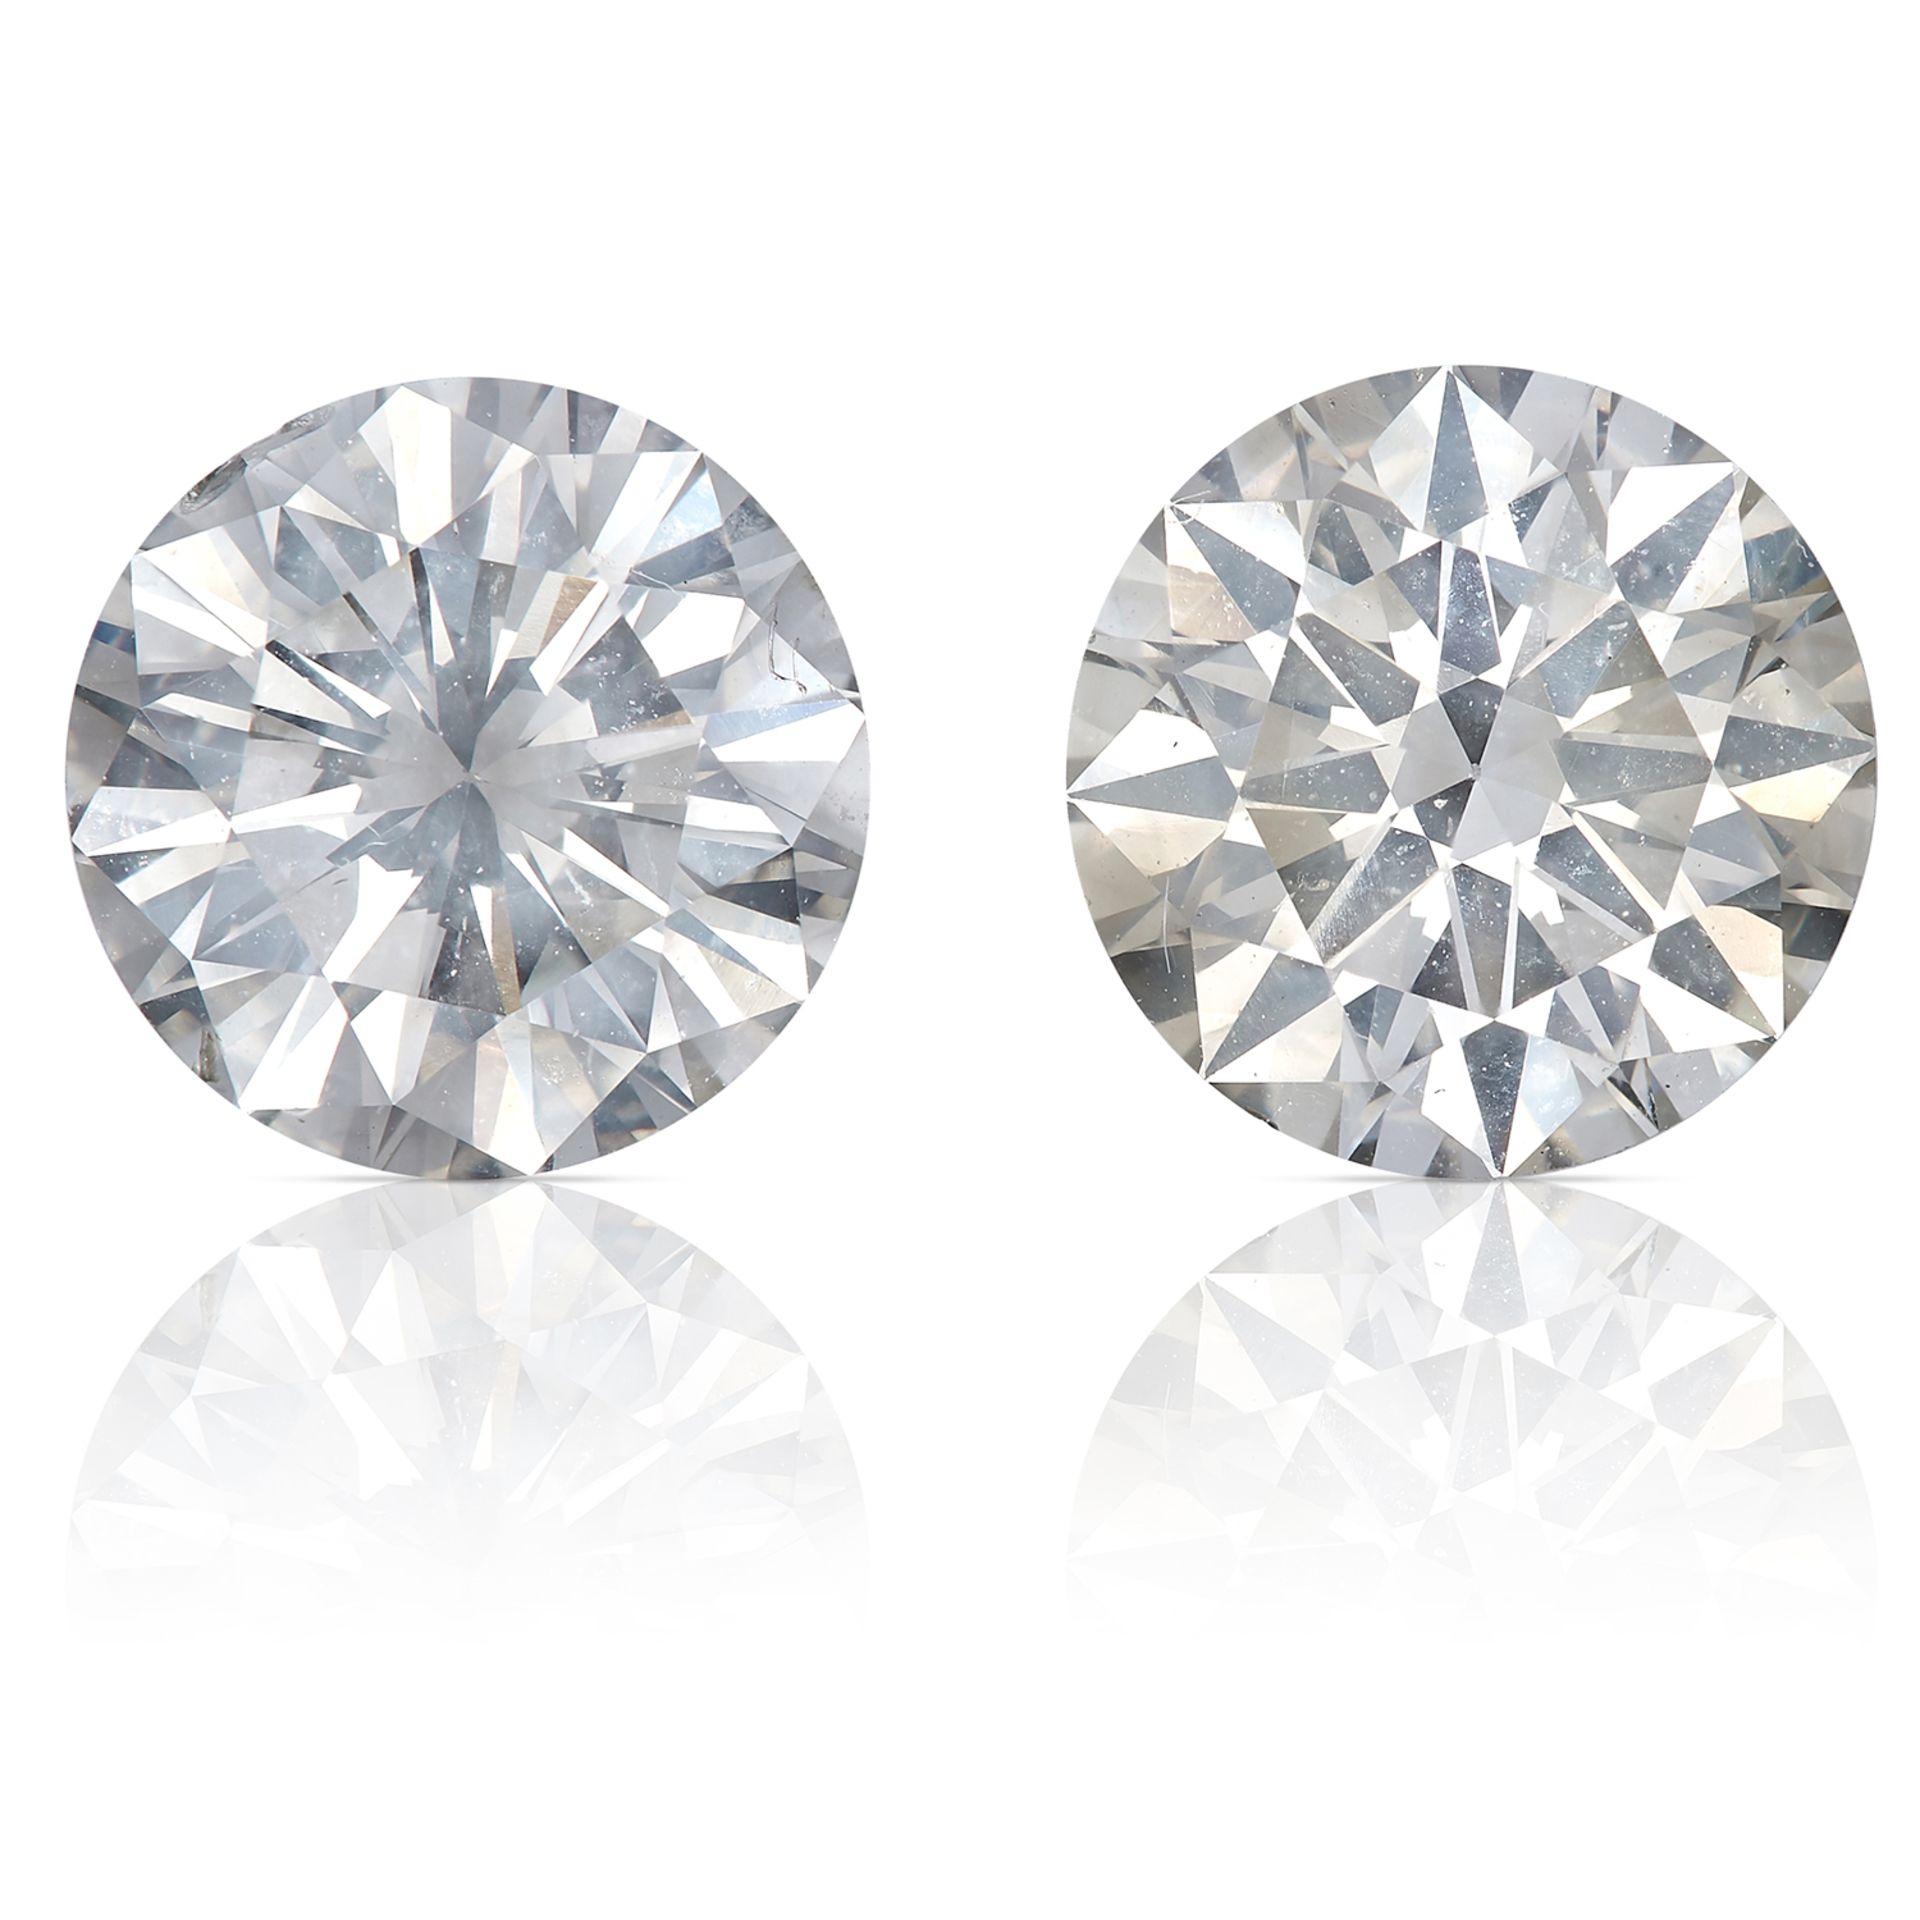 A PAIR OF 3.13 CARAT DIAMOND STUD EARRINGS each stud set with a round brilliant cut diamond,